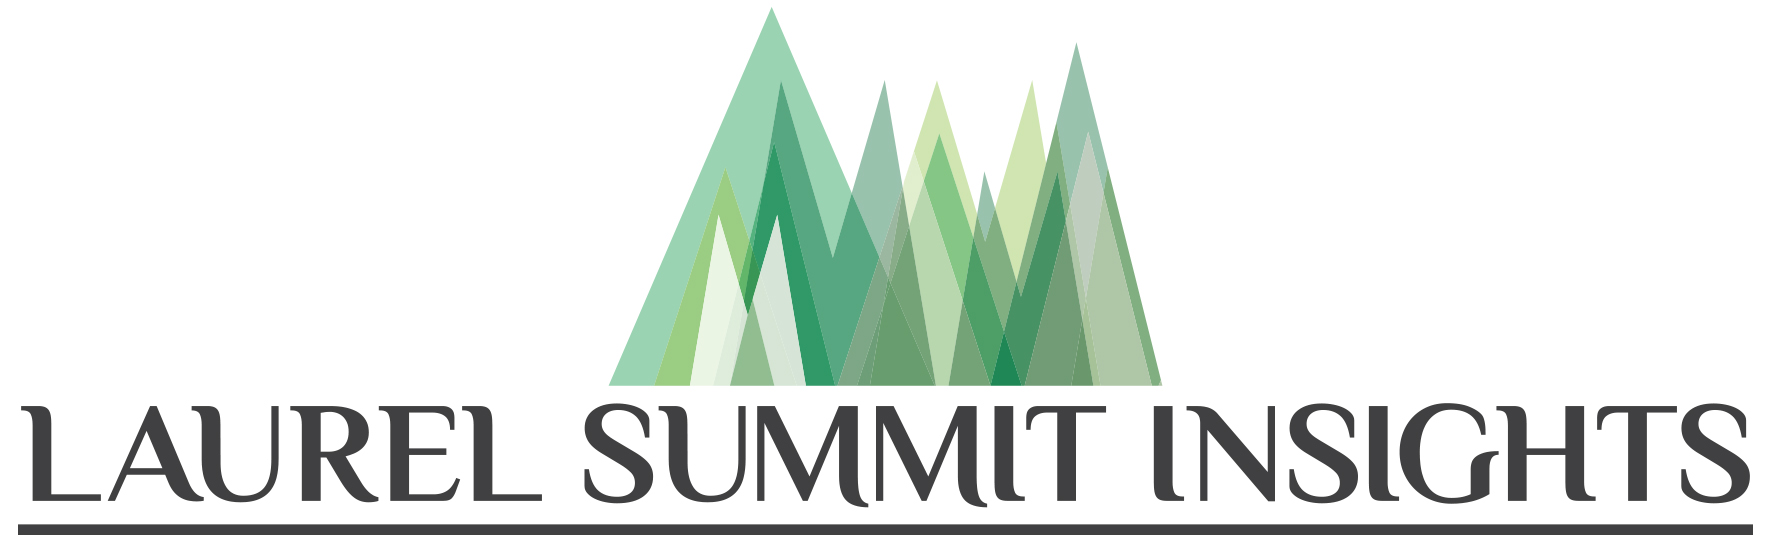 Laurel Summit Insights